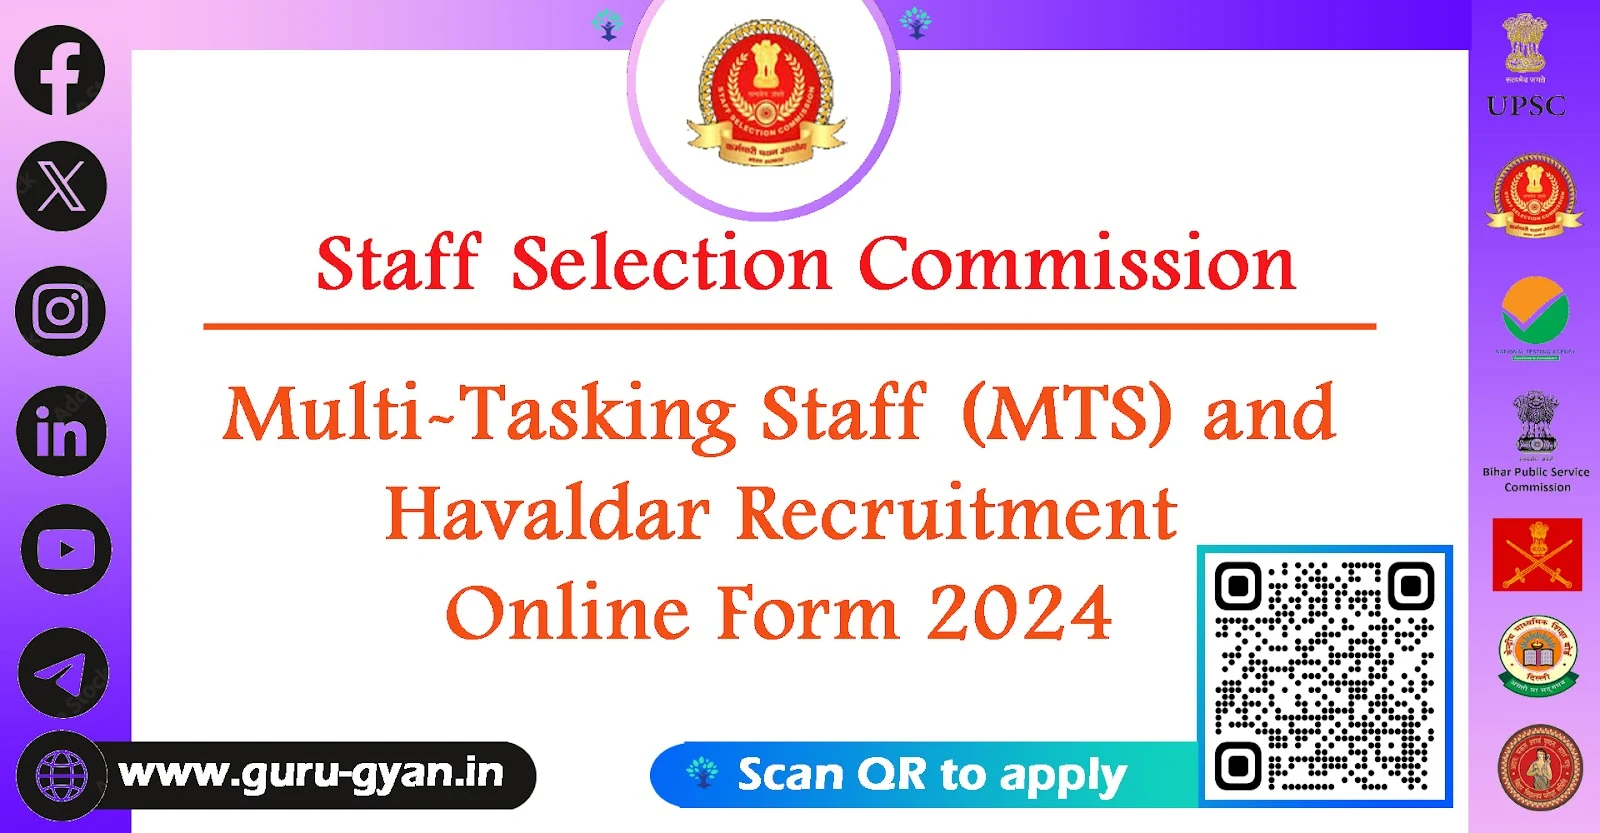 SSC Multi-Tasking Staff (MTS) and Havaldar Online Form 2024